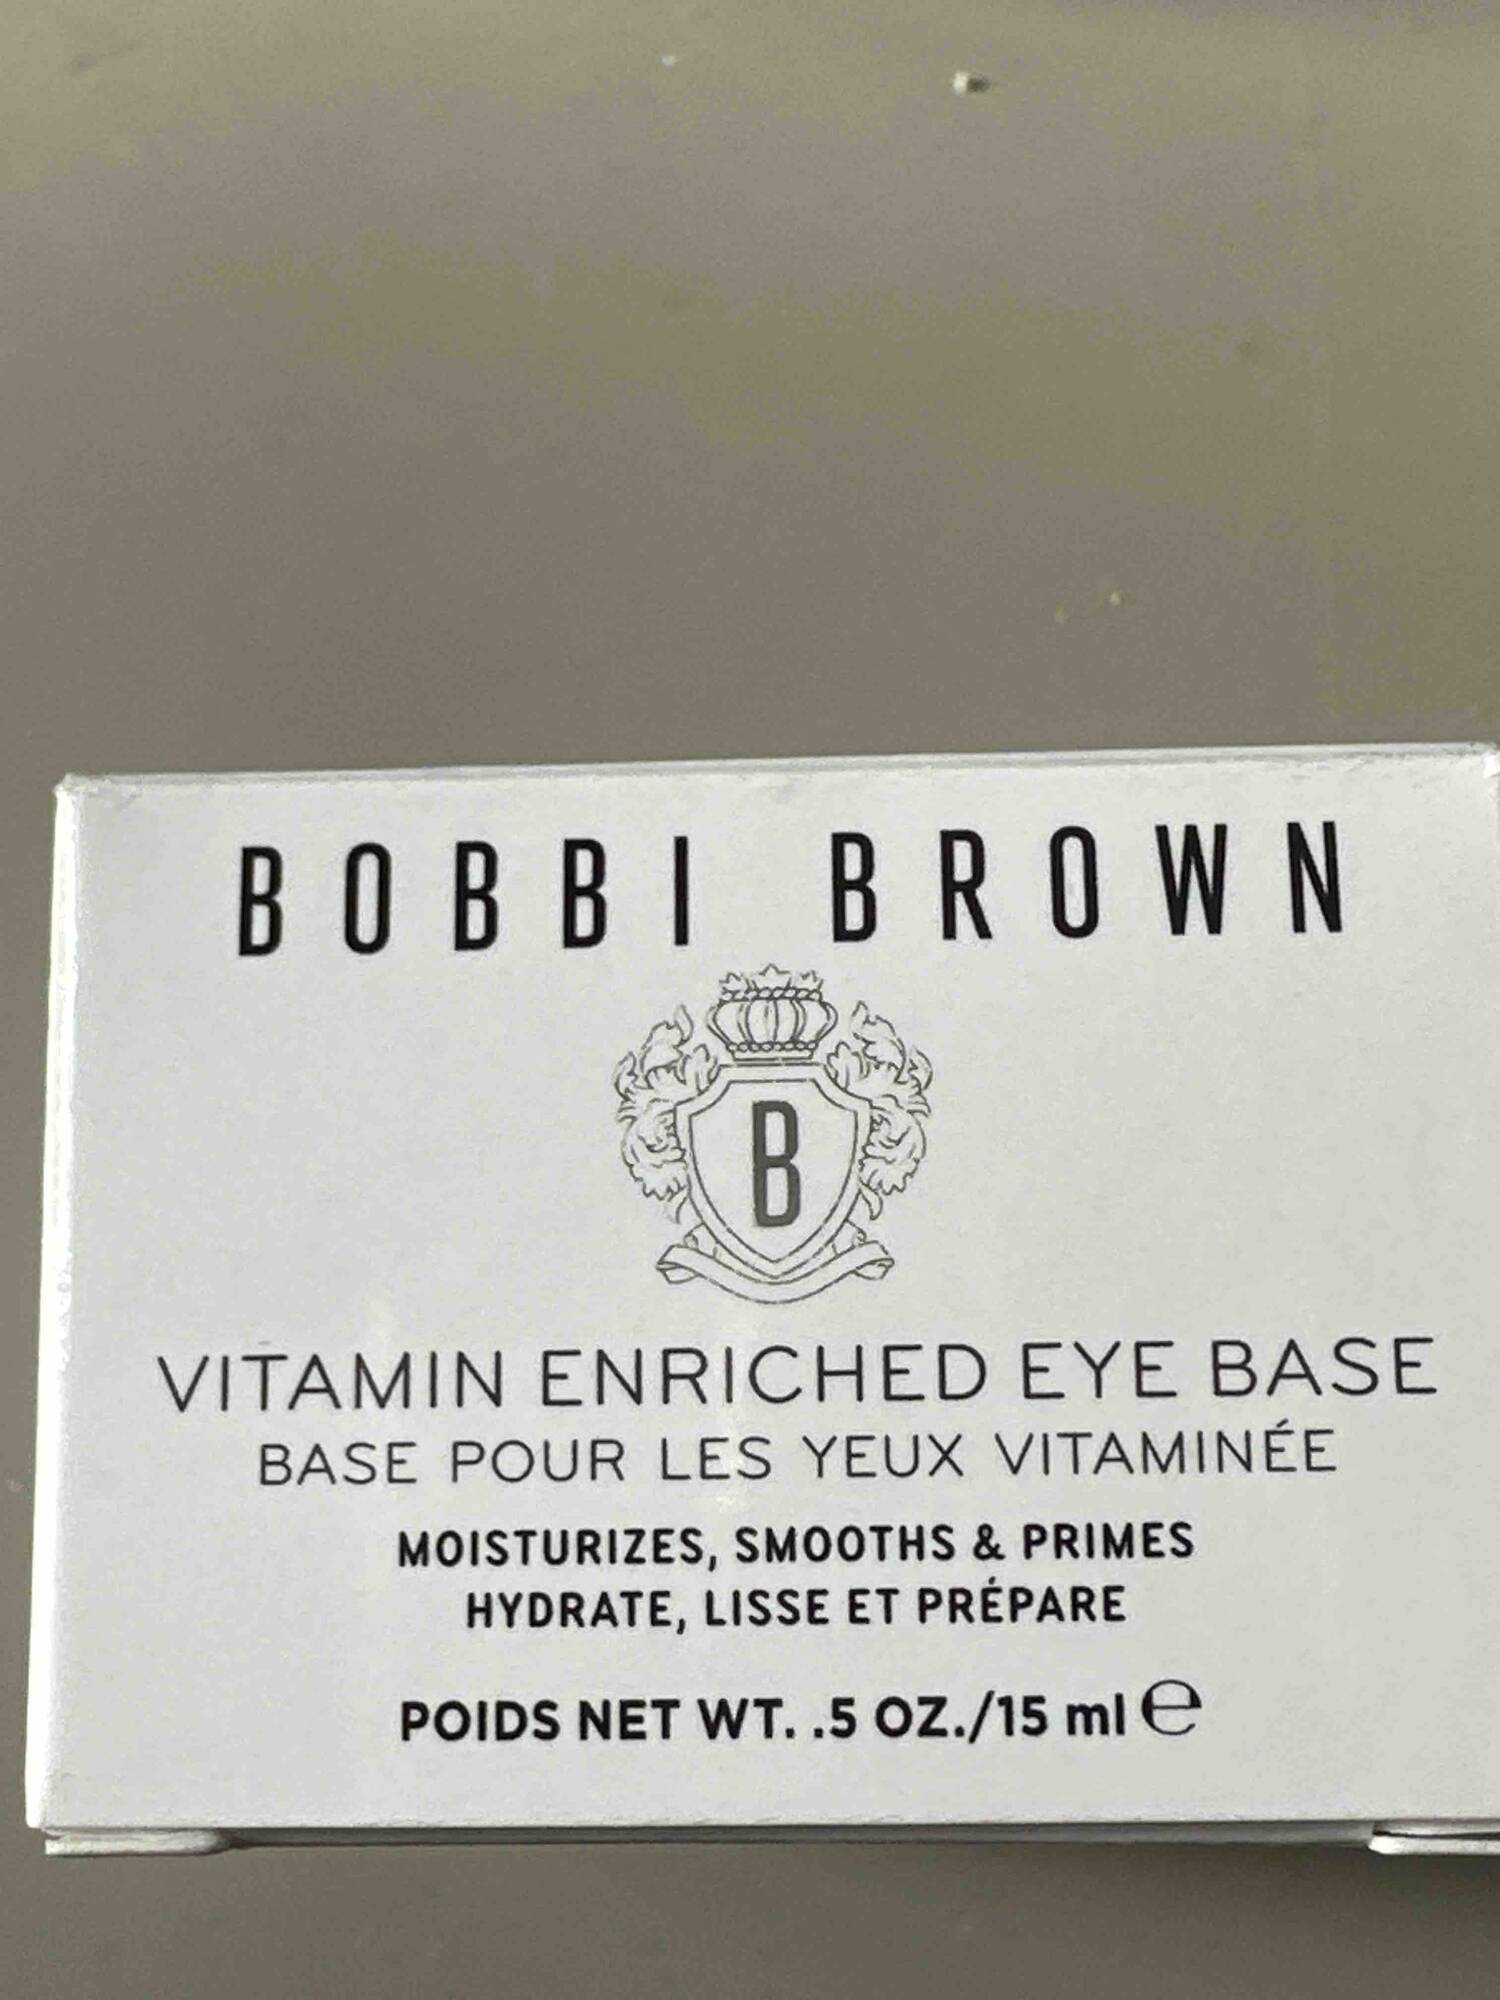 BOBBI BROWN - Base pour les yeux vitaminée